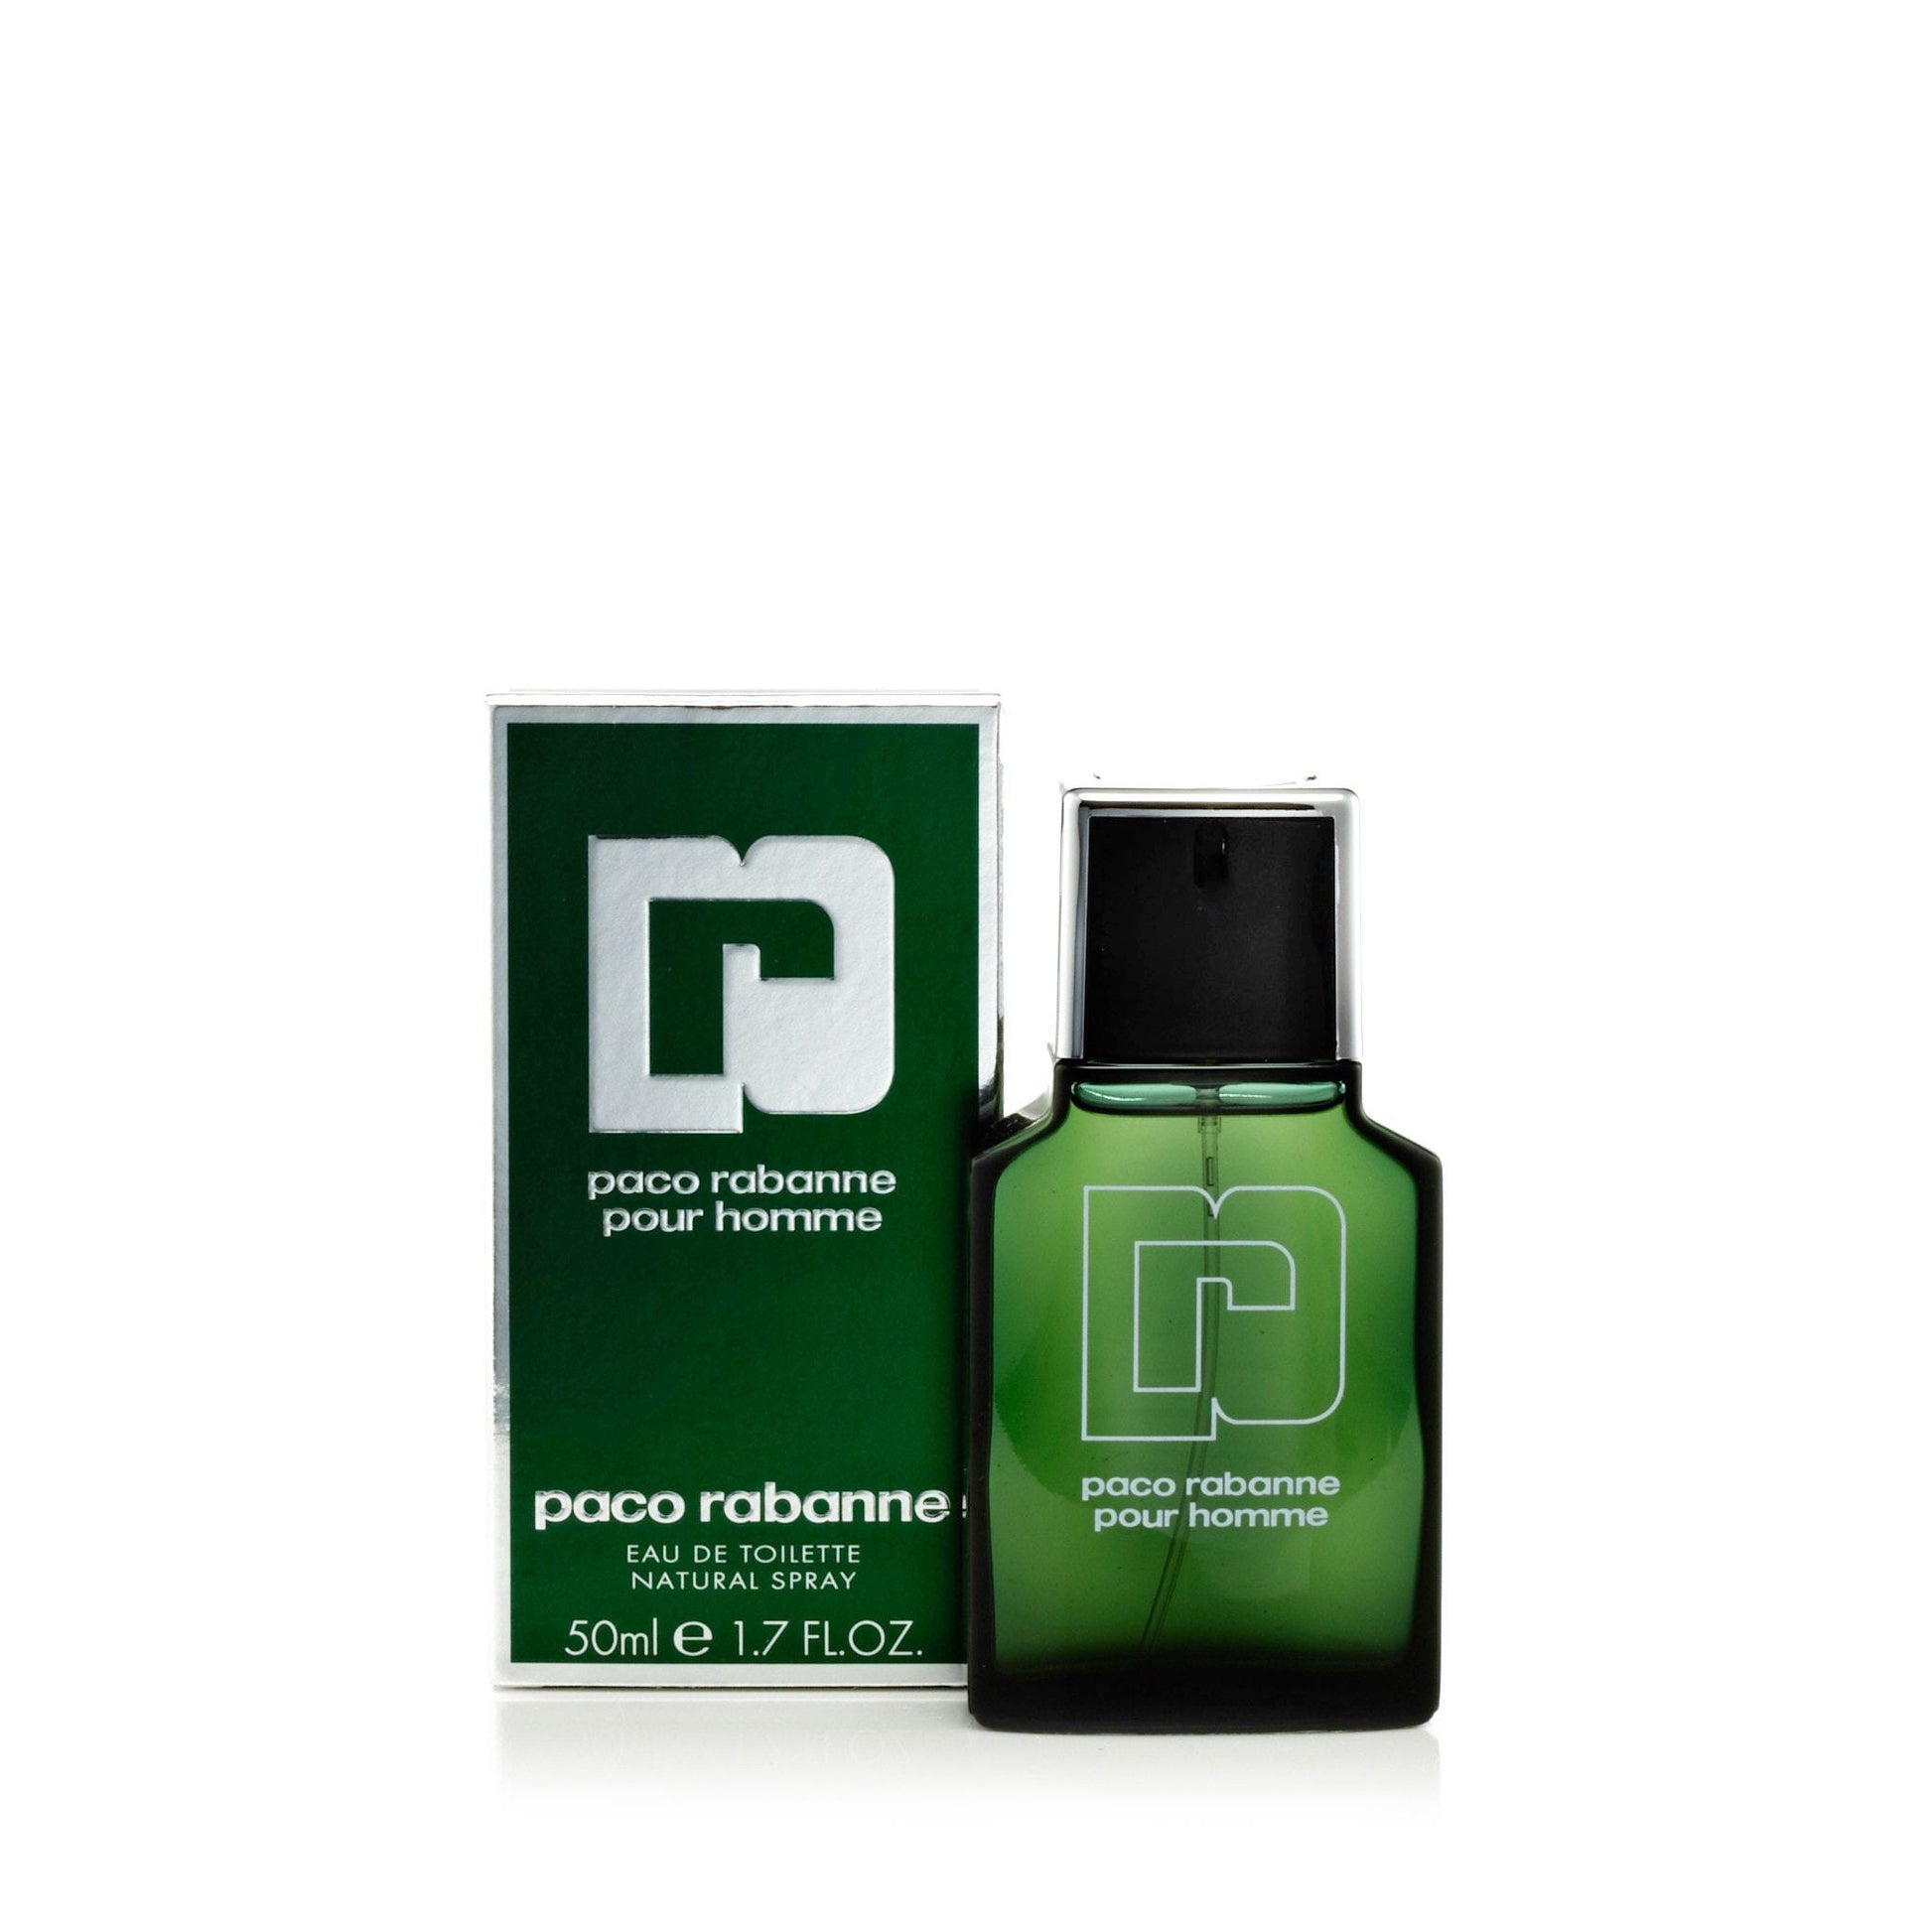 Paco Rabanne Eau de Toilette Spray for Men by Paco Rabanne, Product image 4